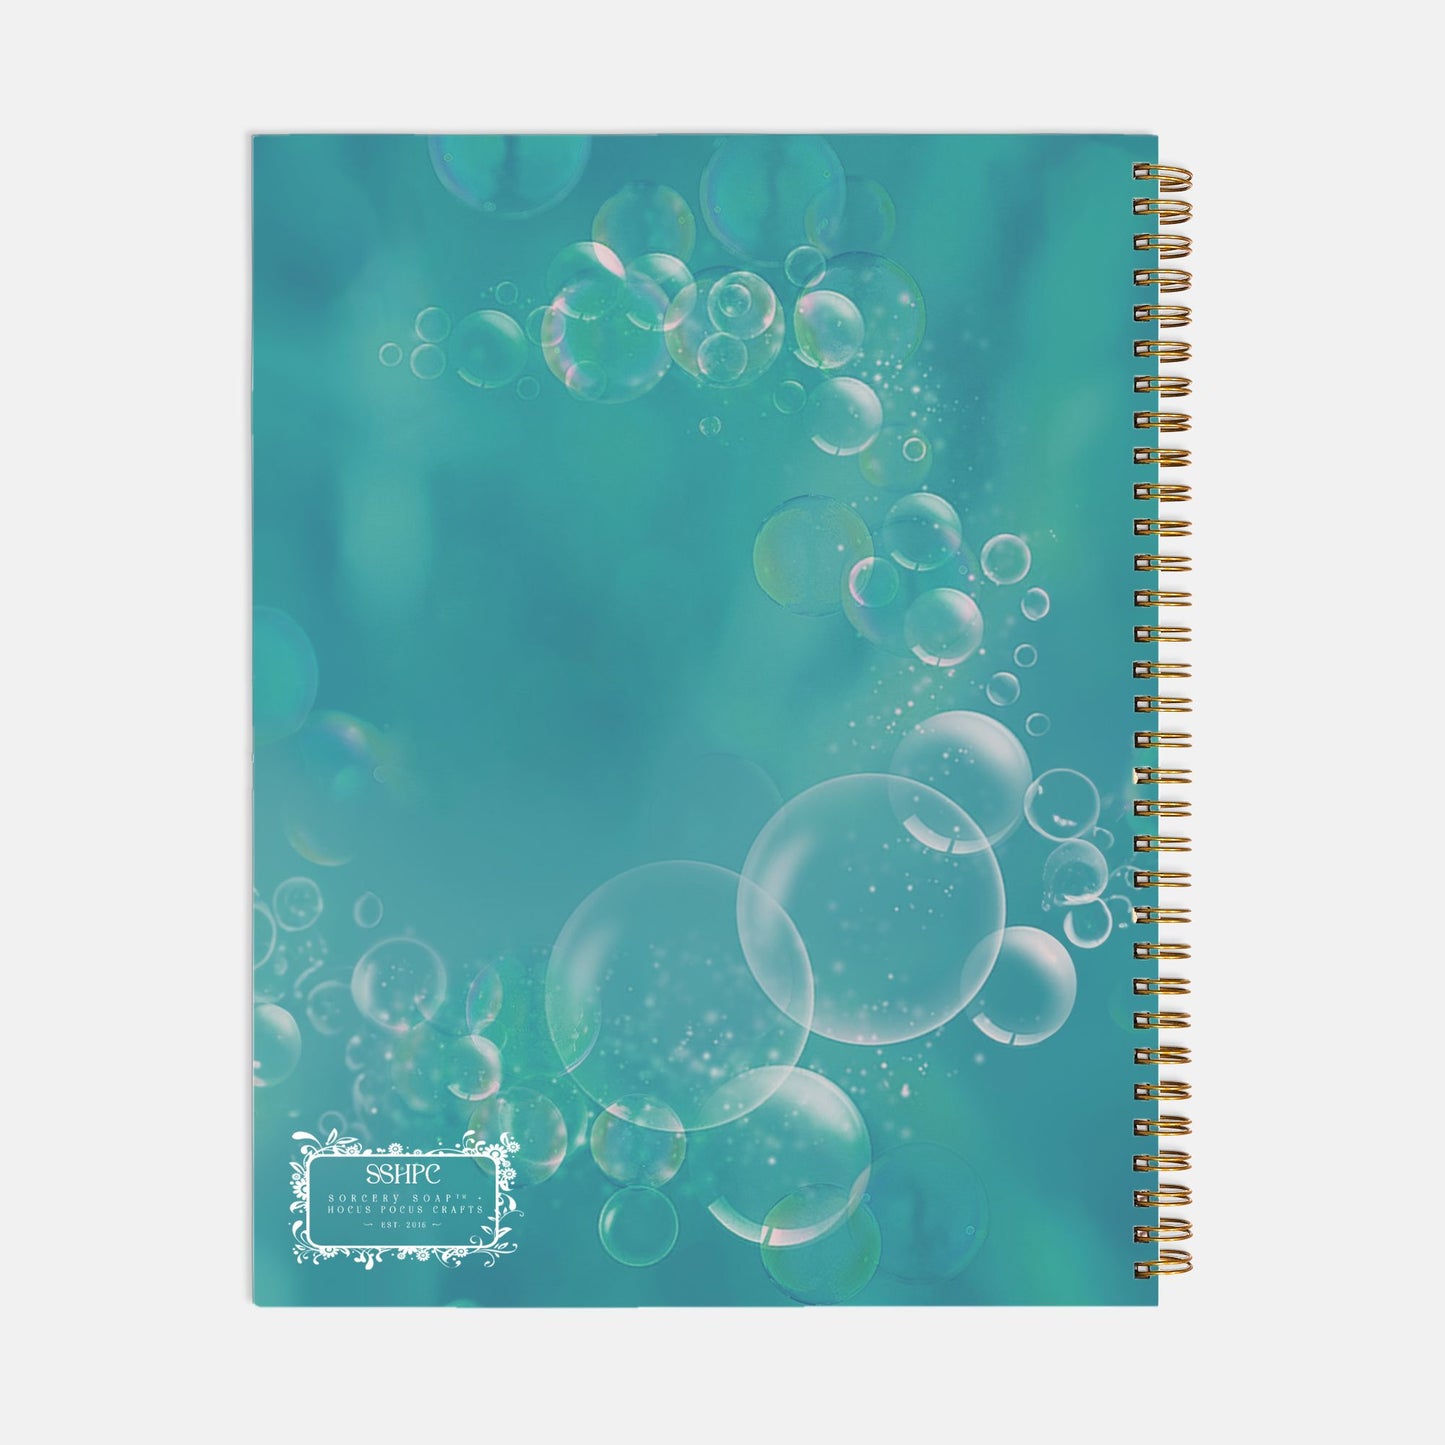 Mermaid Queen Journal Notebook Hardcover Spiral 8.5 x 11